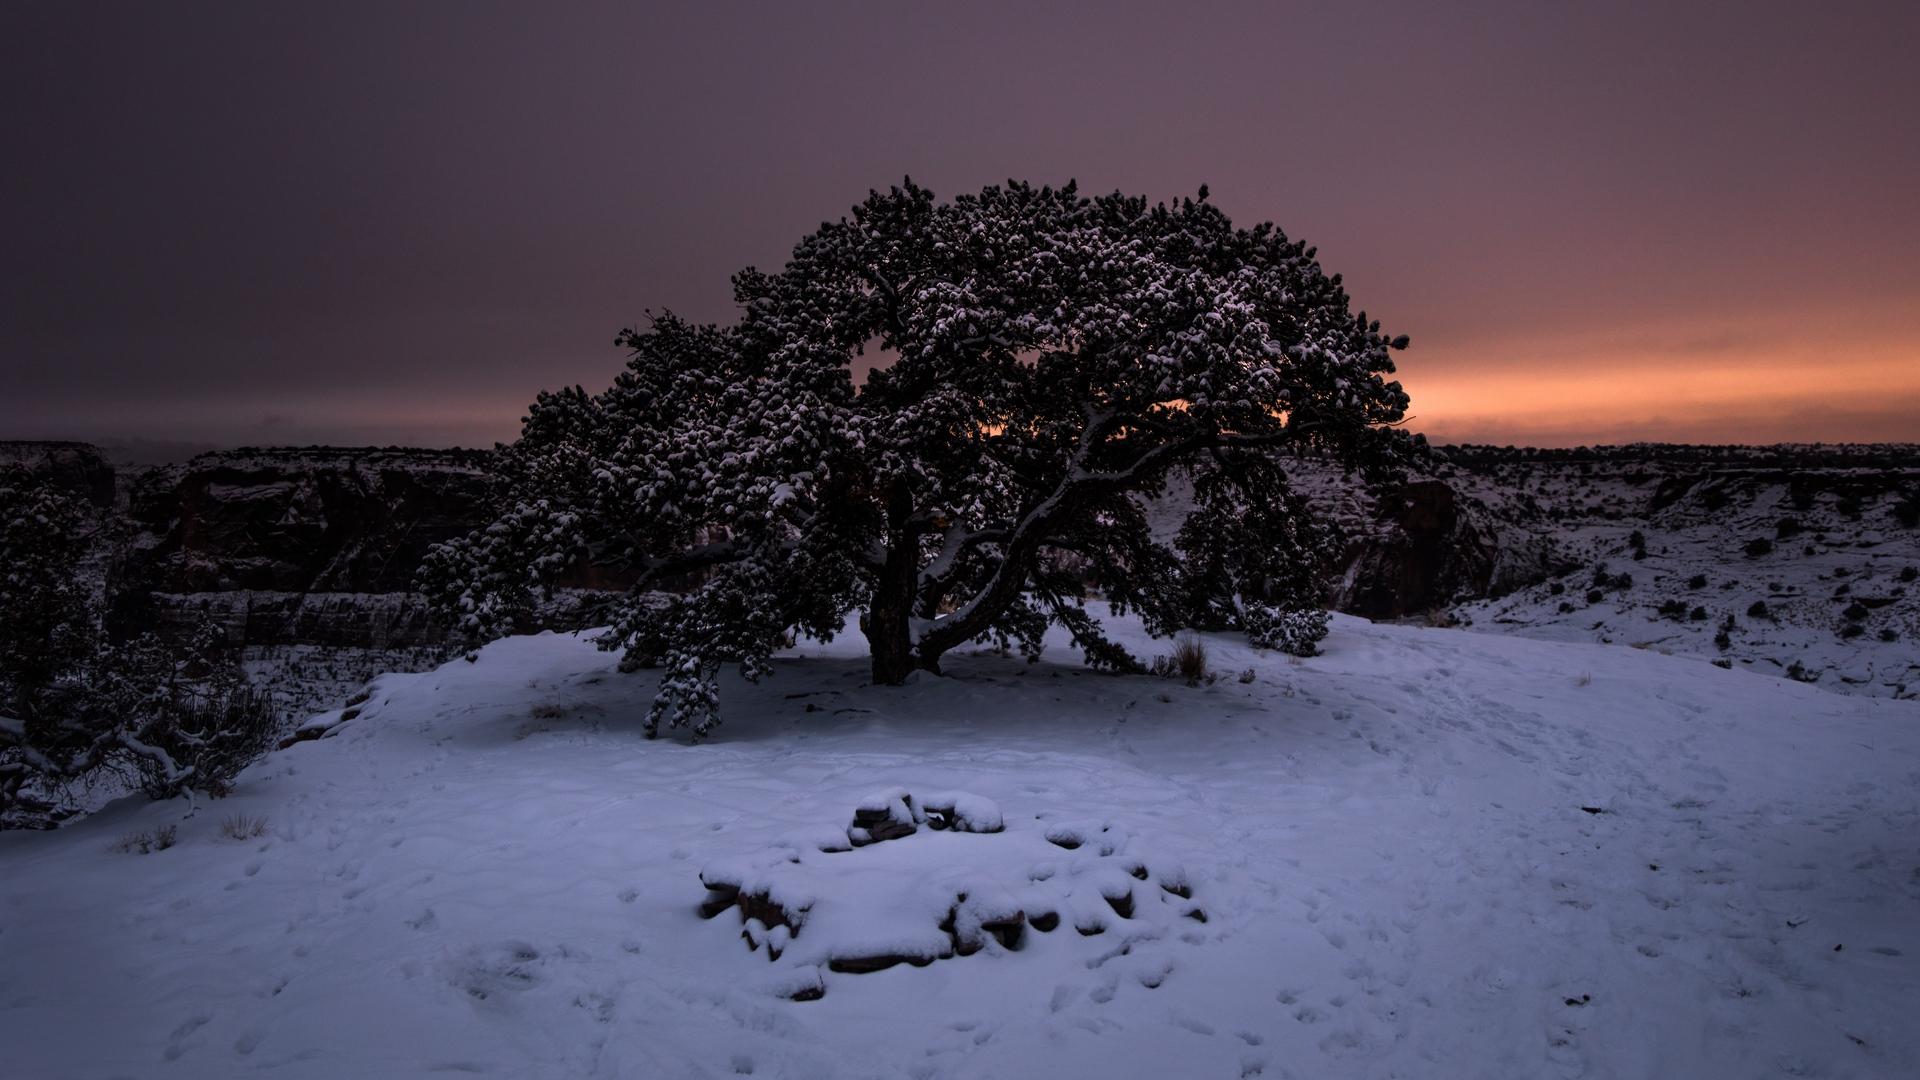 Download wallpaper 1920x1080 tree, snow, winter, night